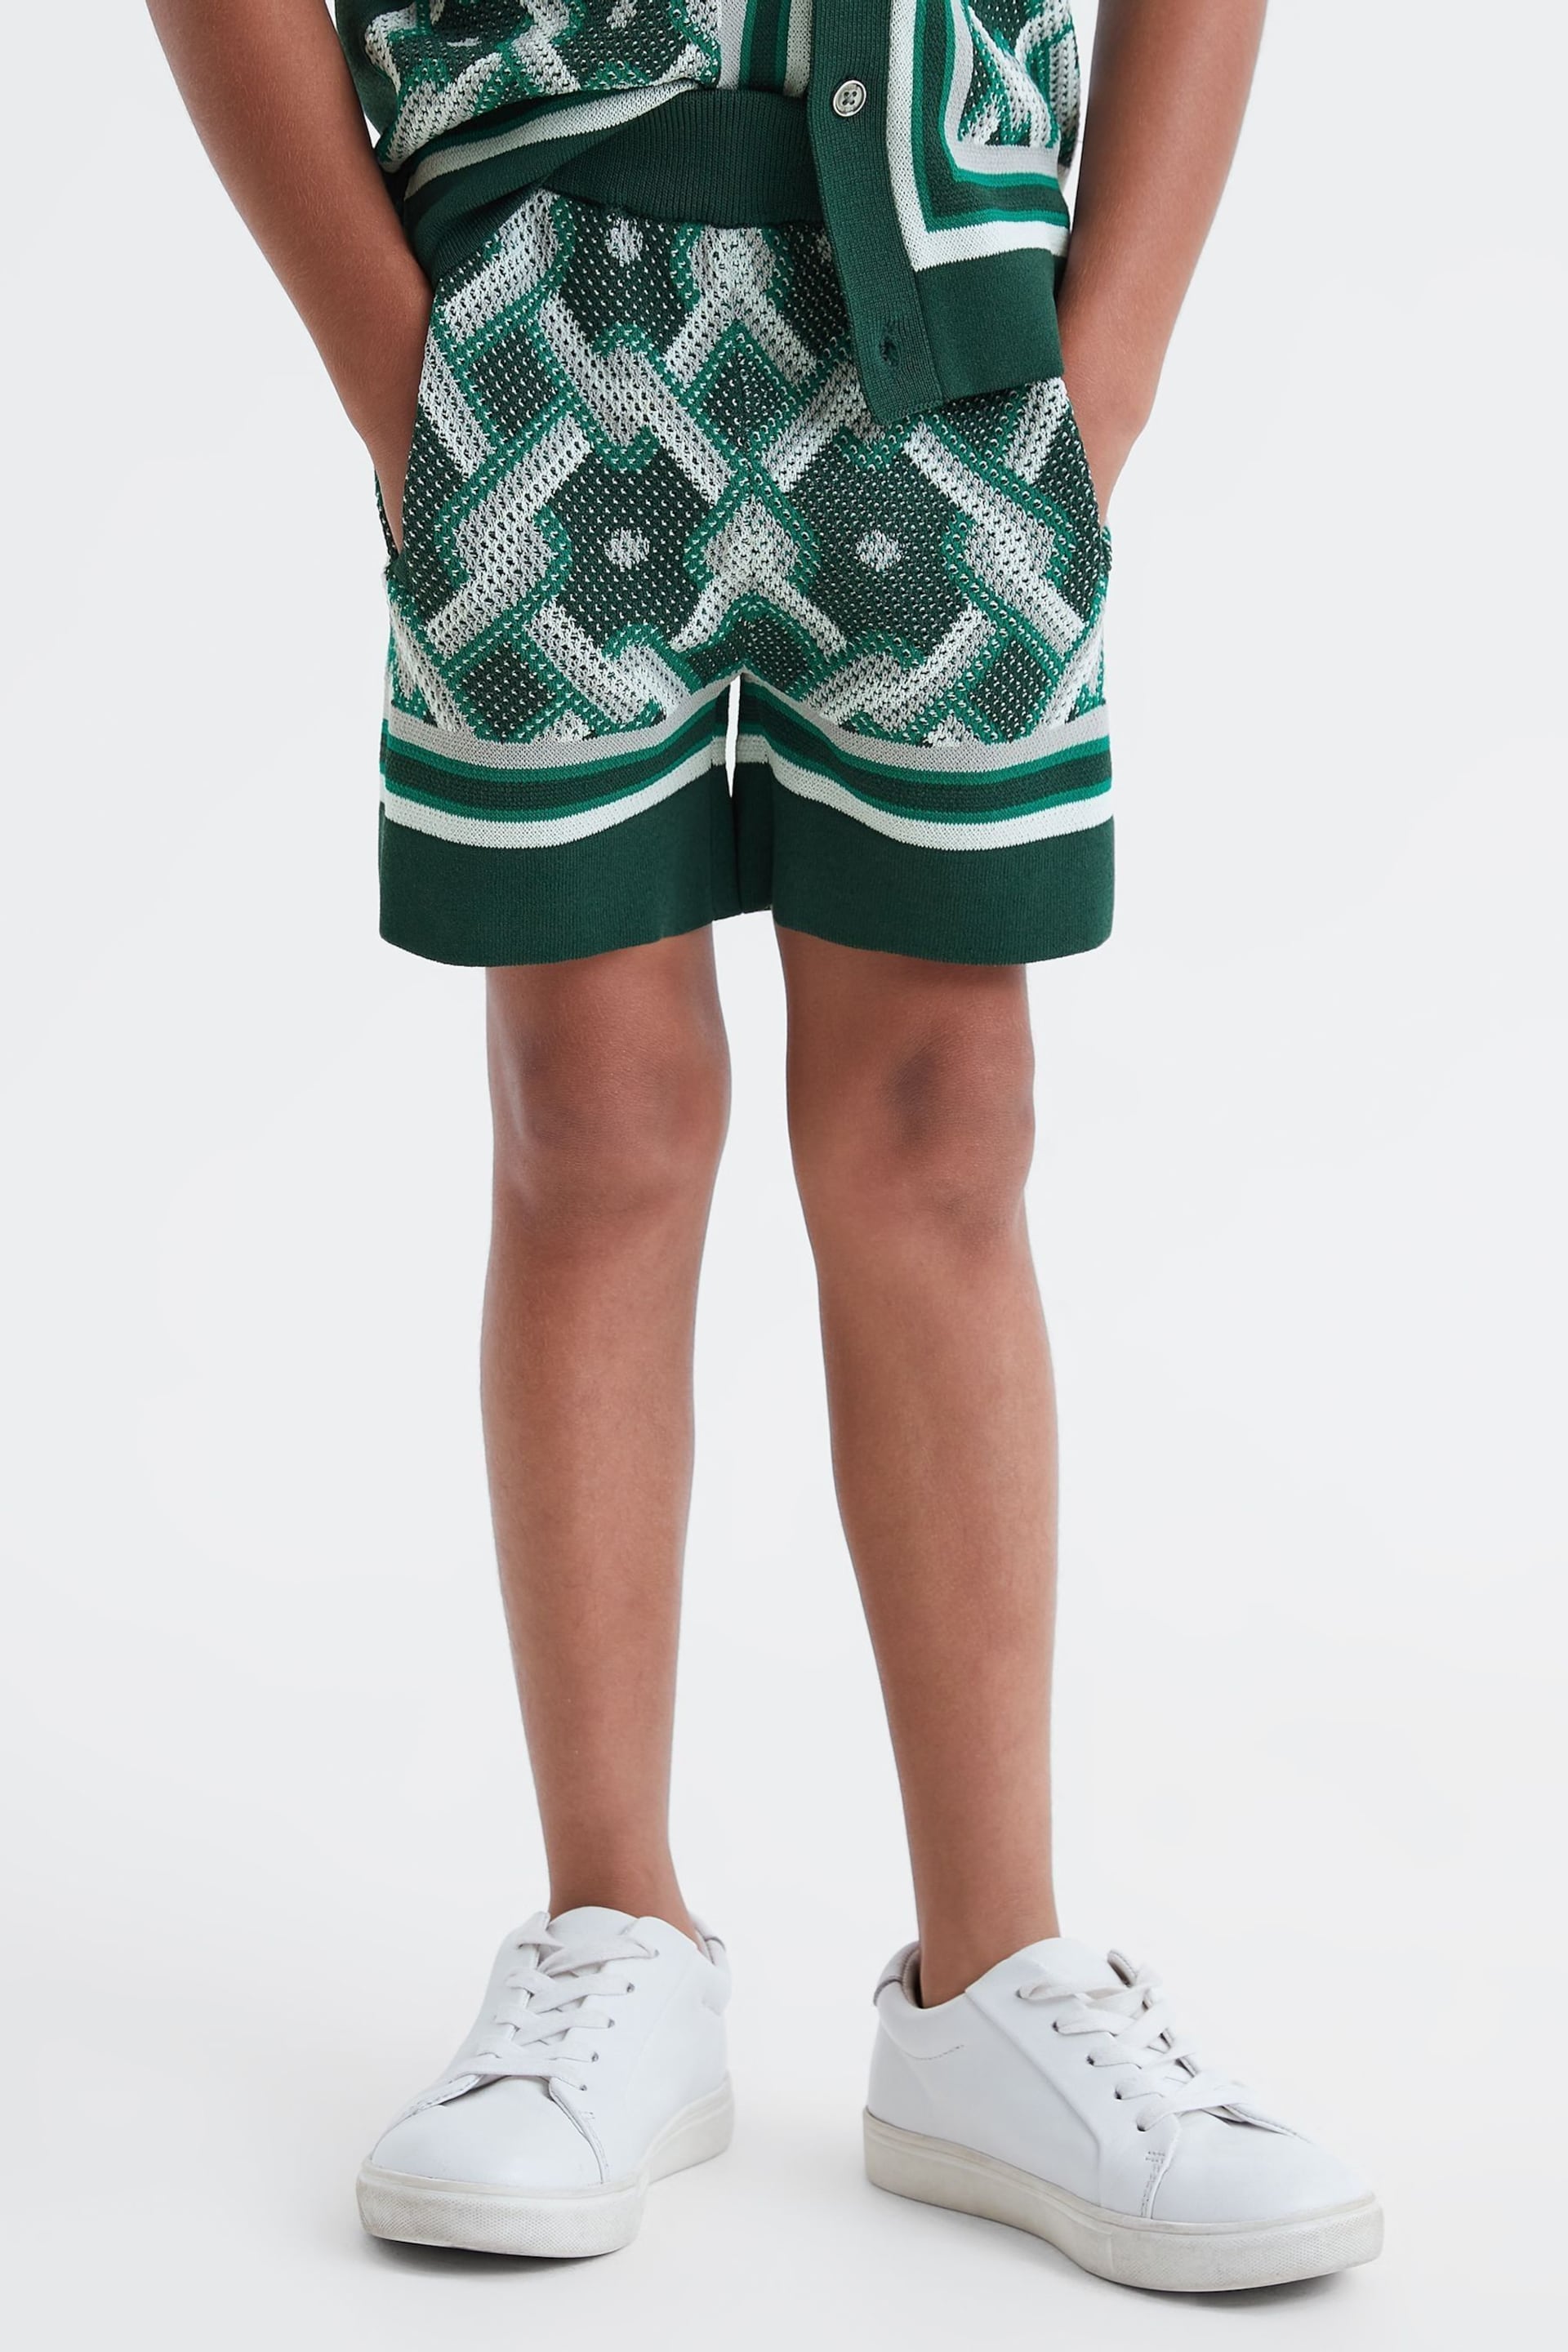 Reiss Green Multi Jack Senior Knitted Elasticated Waistband Shorts - Image 1 of 6